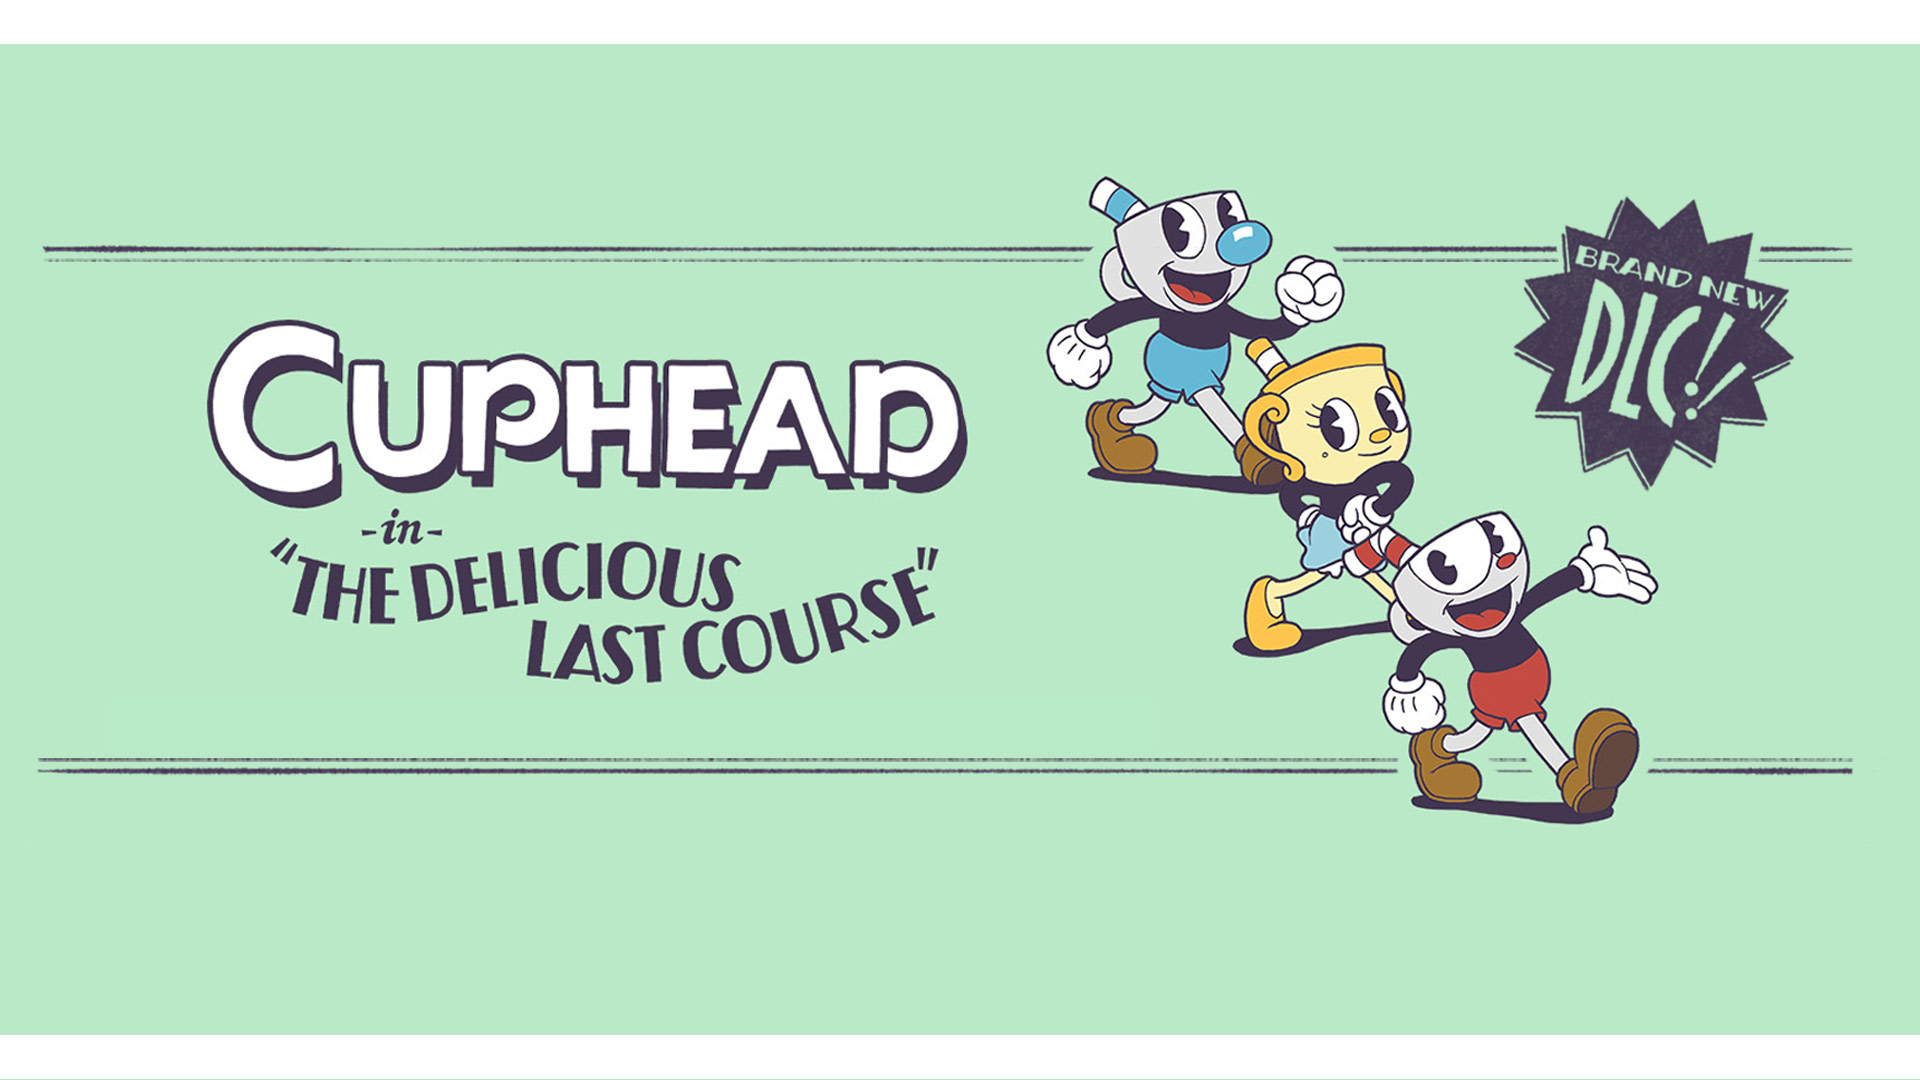 Cuphead em The delicious last course, DLC totalmente novo!, 3 personagens Cuphead posando